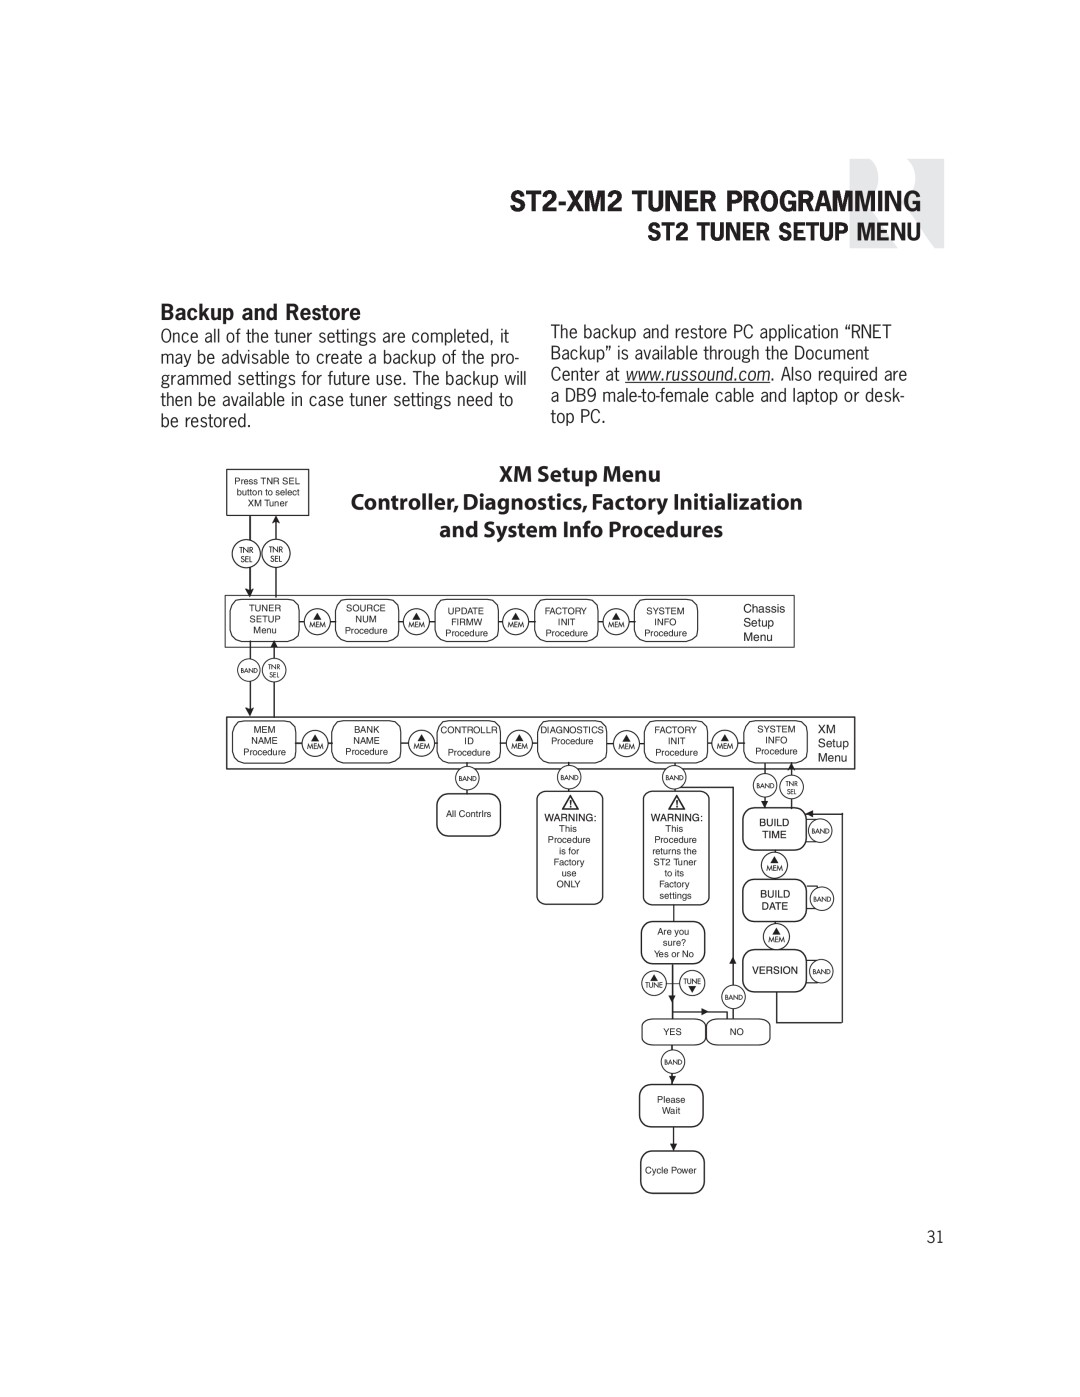 Russound ST2-XM2 XM Setup Menu, Backup and Restore, Controller, Diagnostics, Factory Initialization, ST2 TUNER SETUP MENU 